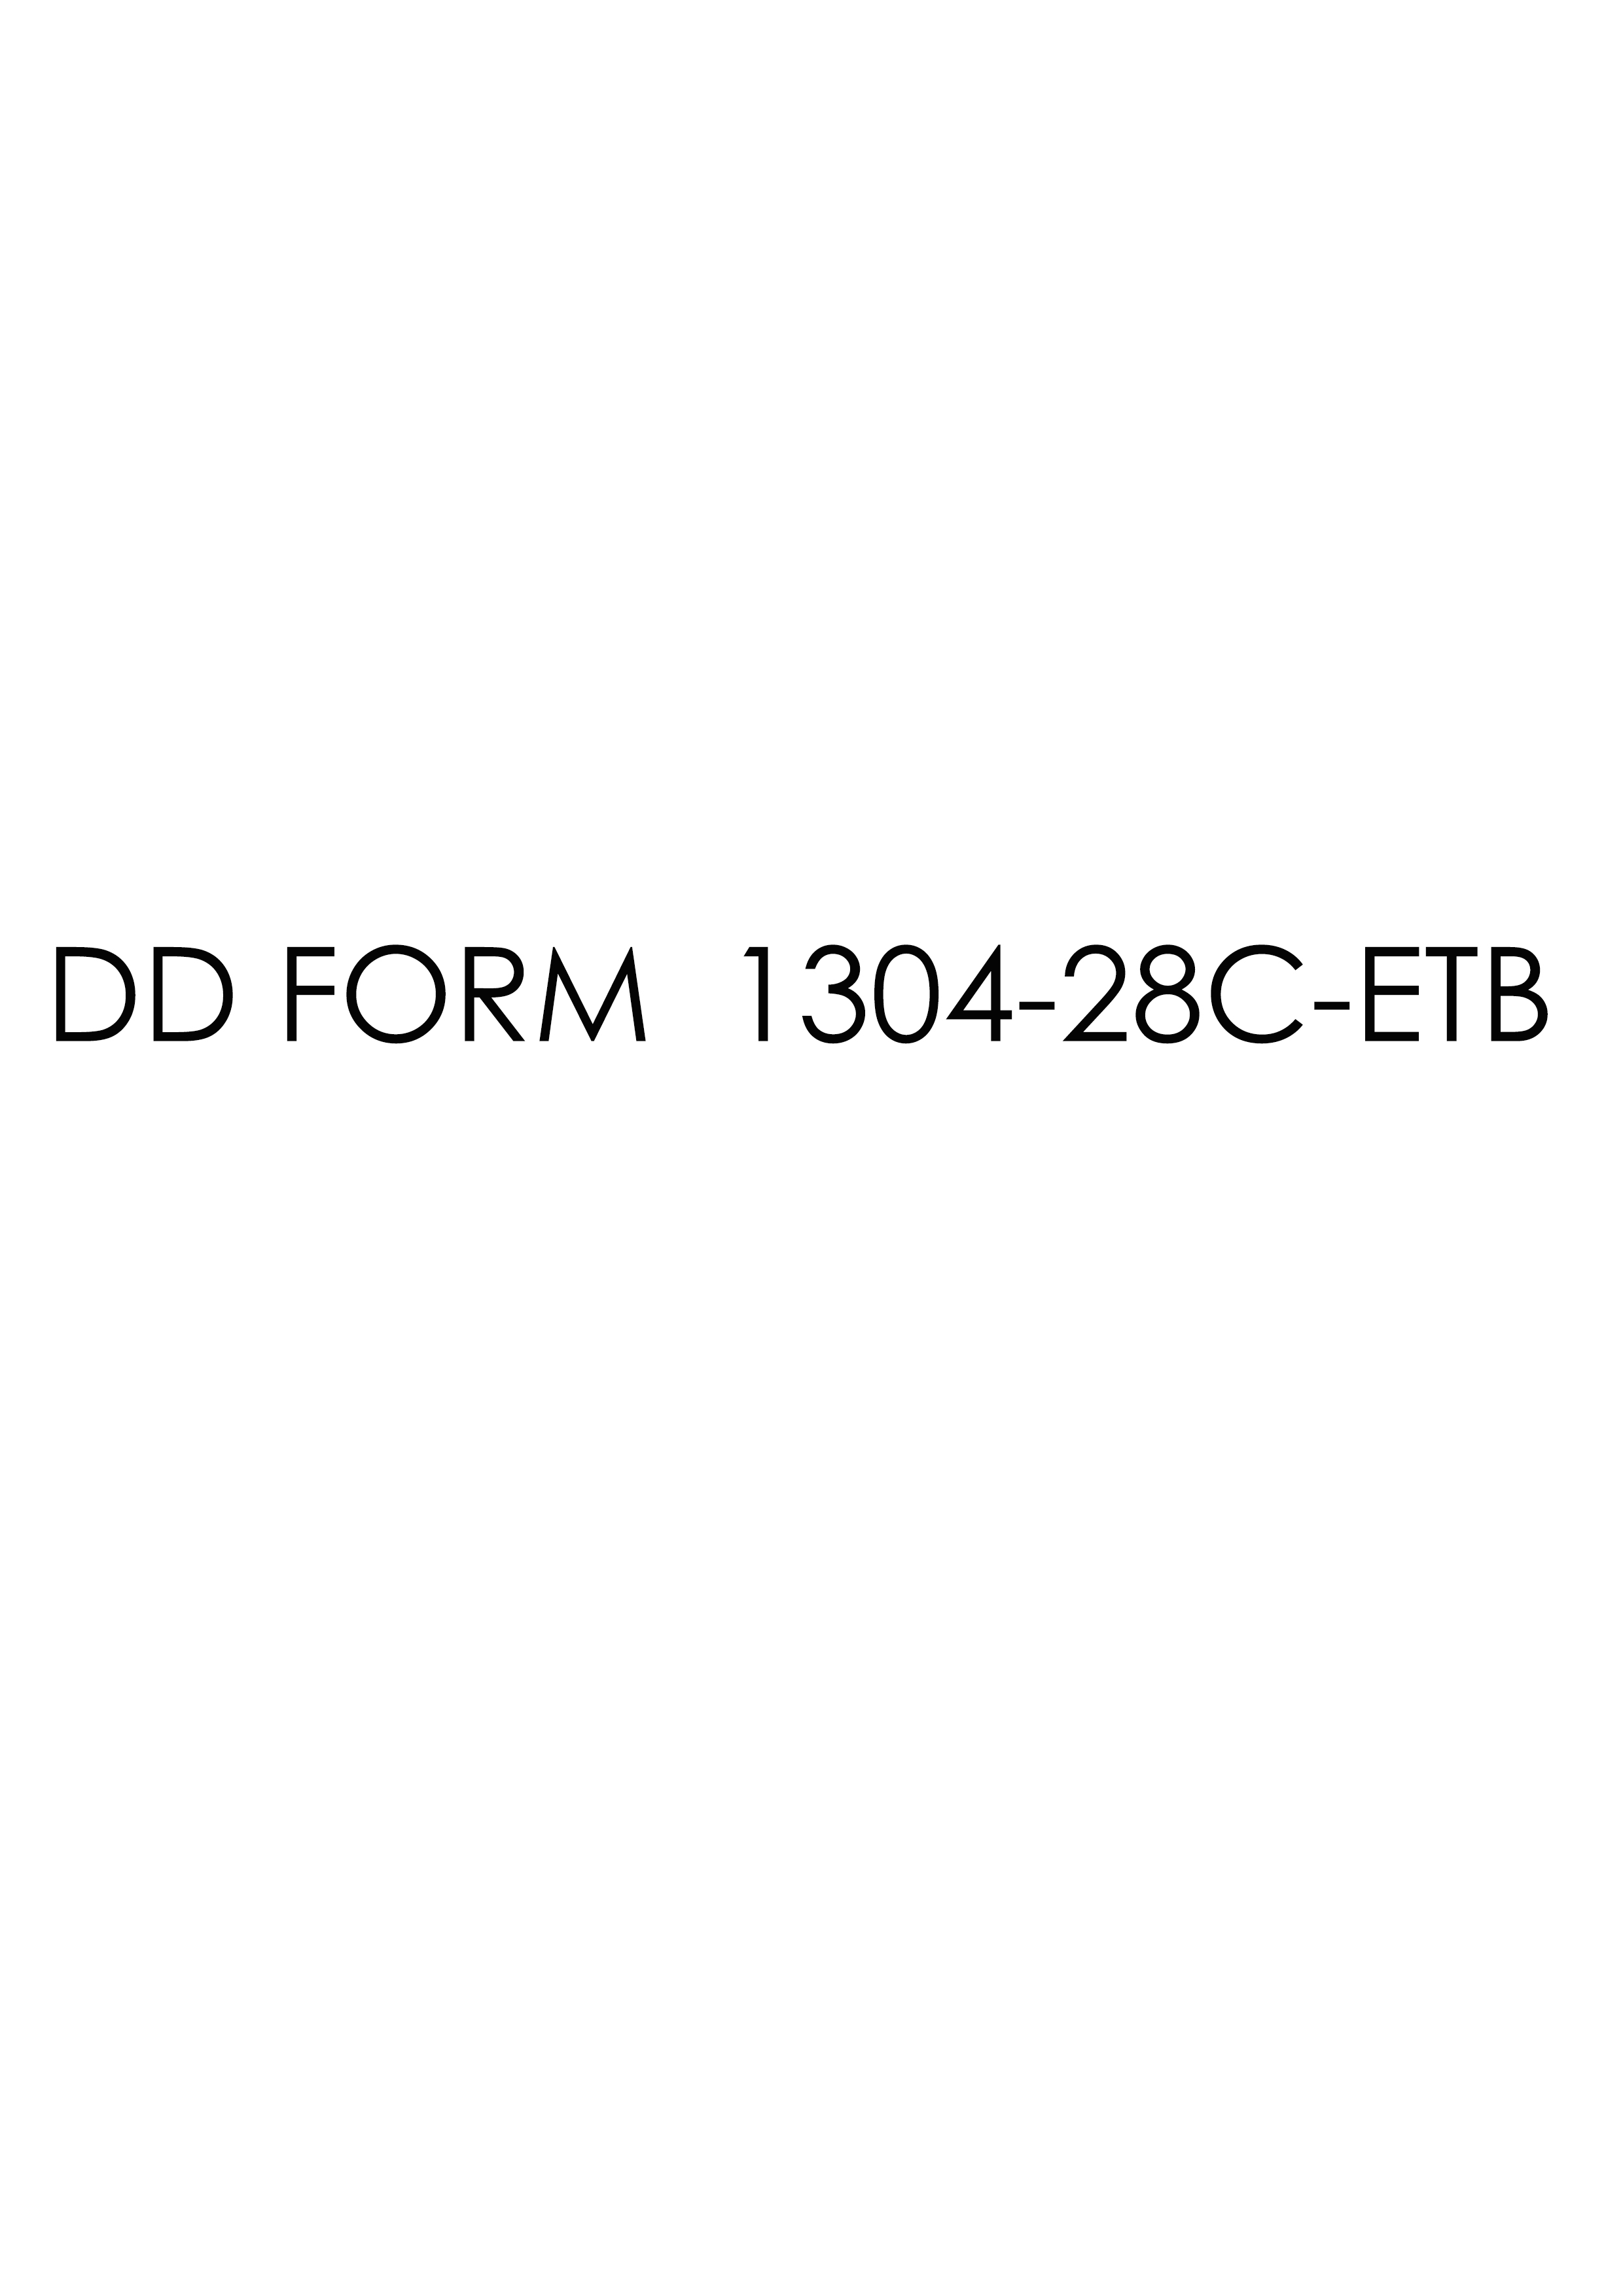 dd Form 1304-28C-ETB fillable